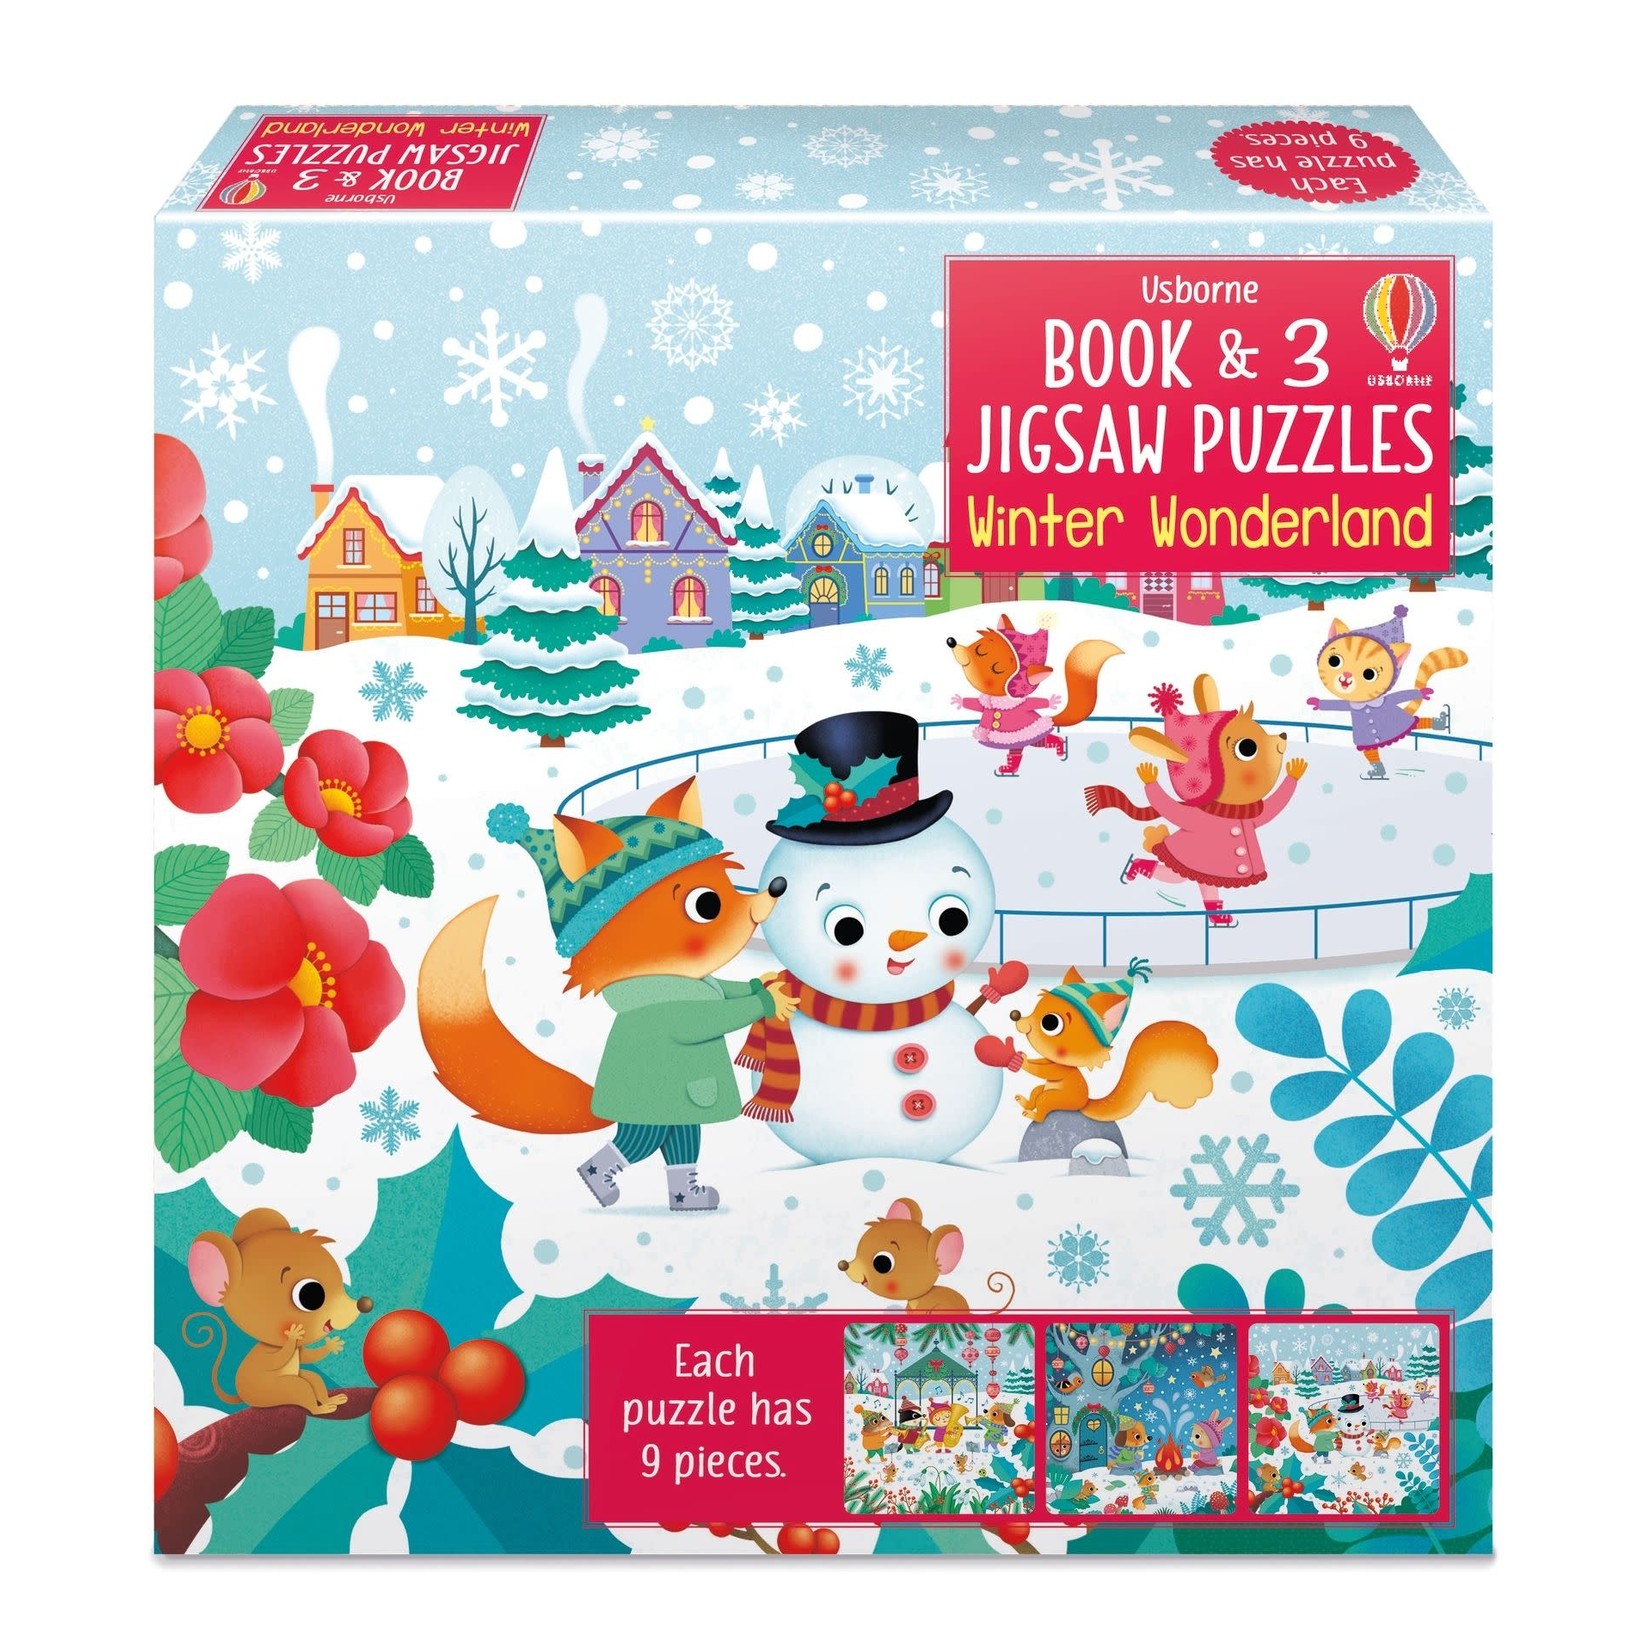 Usborne Book & 3 Jigsaw Puzzles: Winter Wonderland (9 pieces)